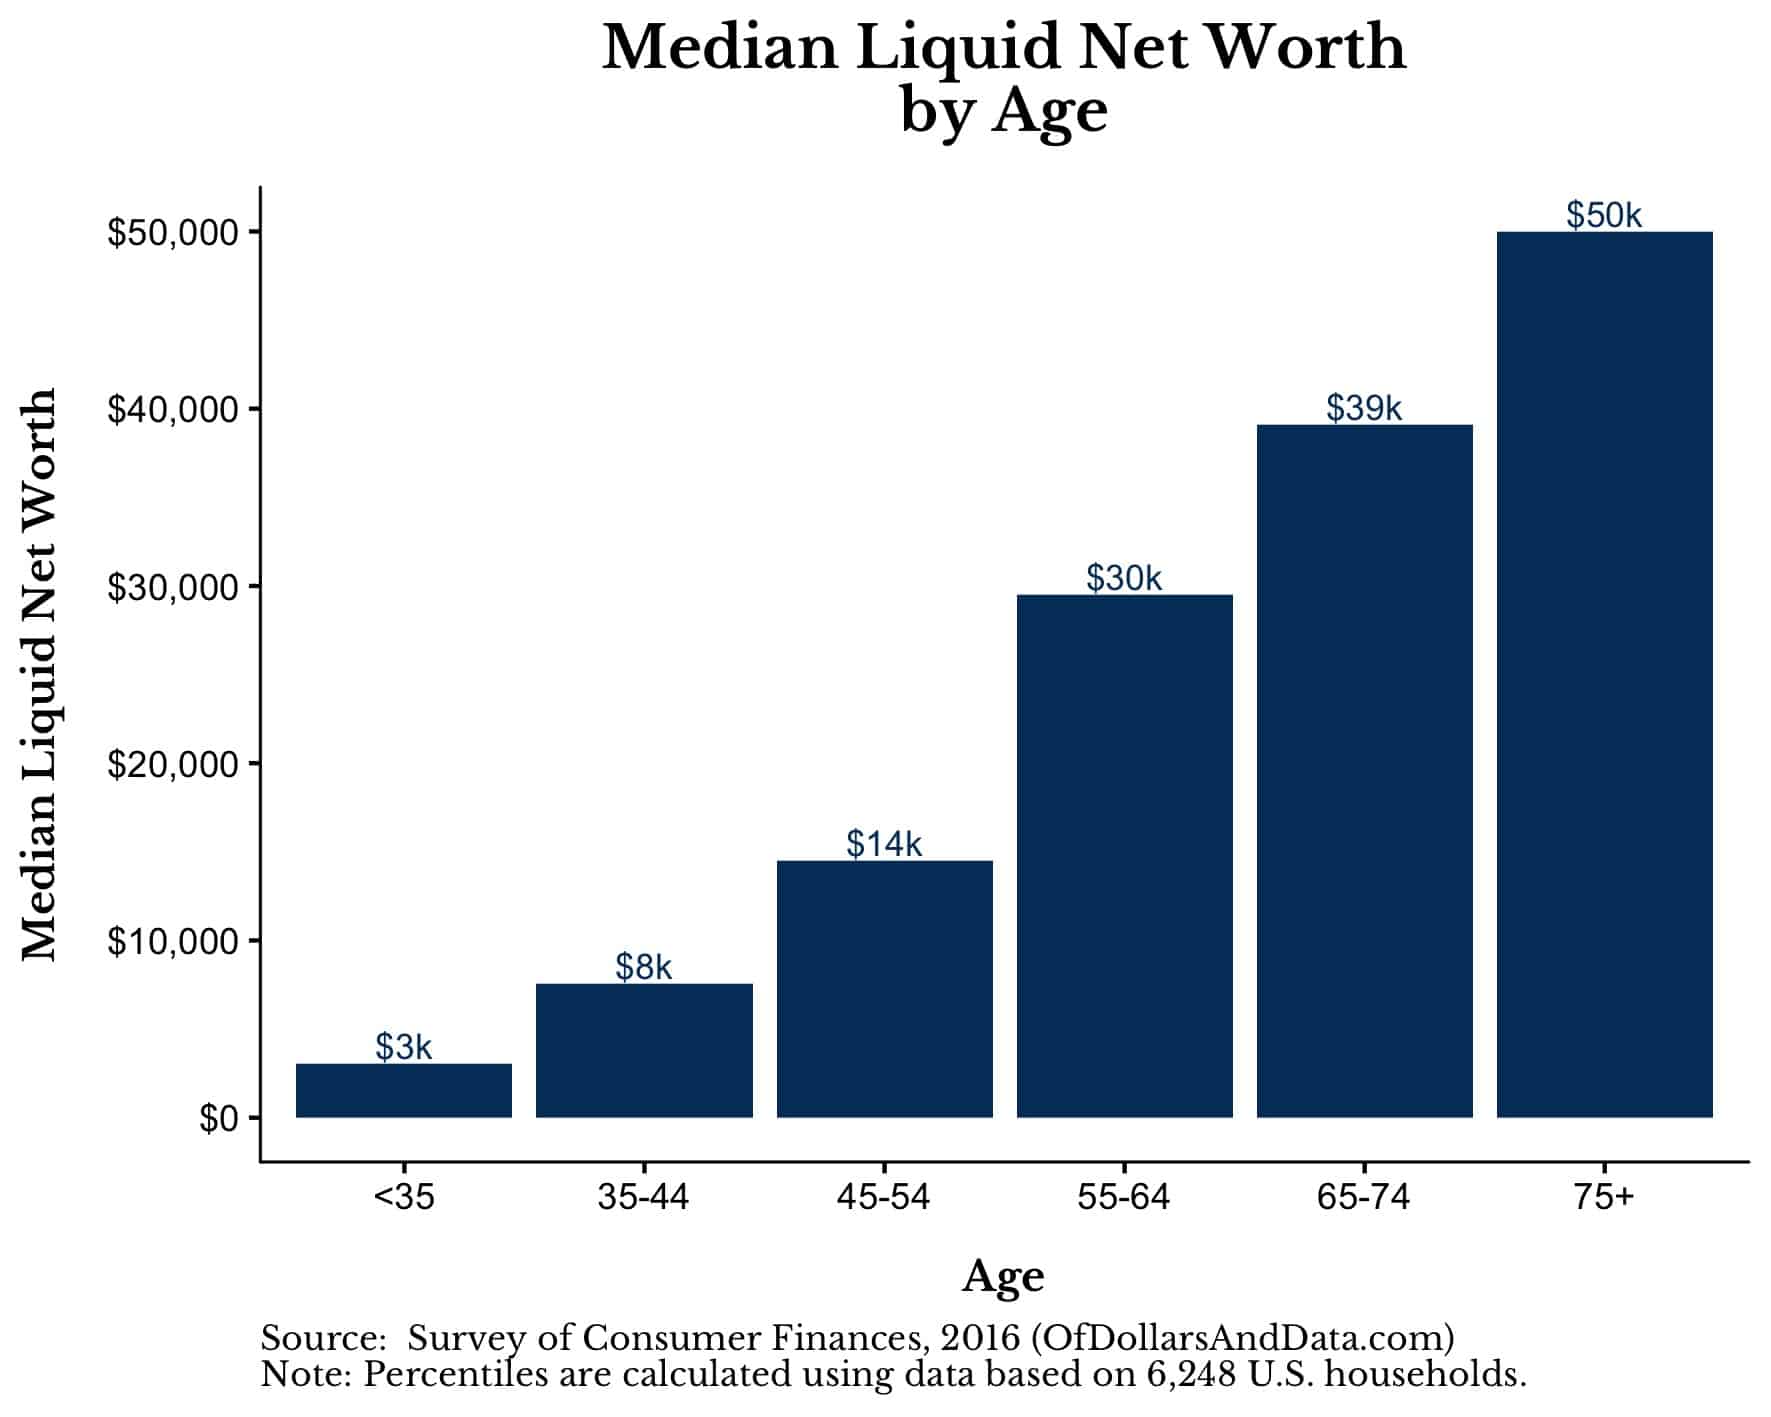 Median liquid net worth by age, 2016 Survey of Consumer Finances